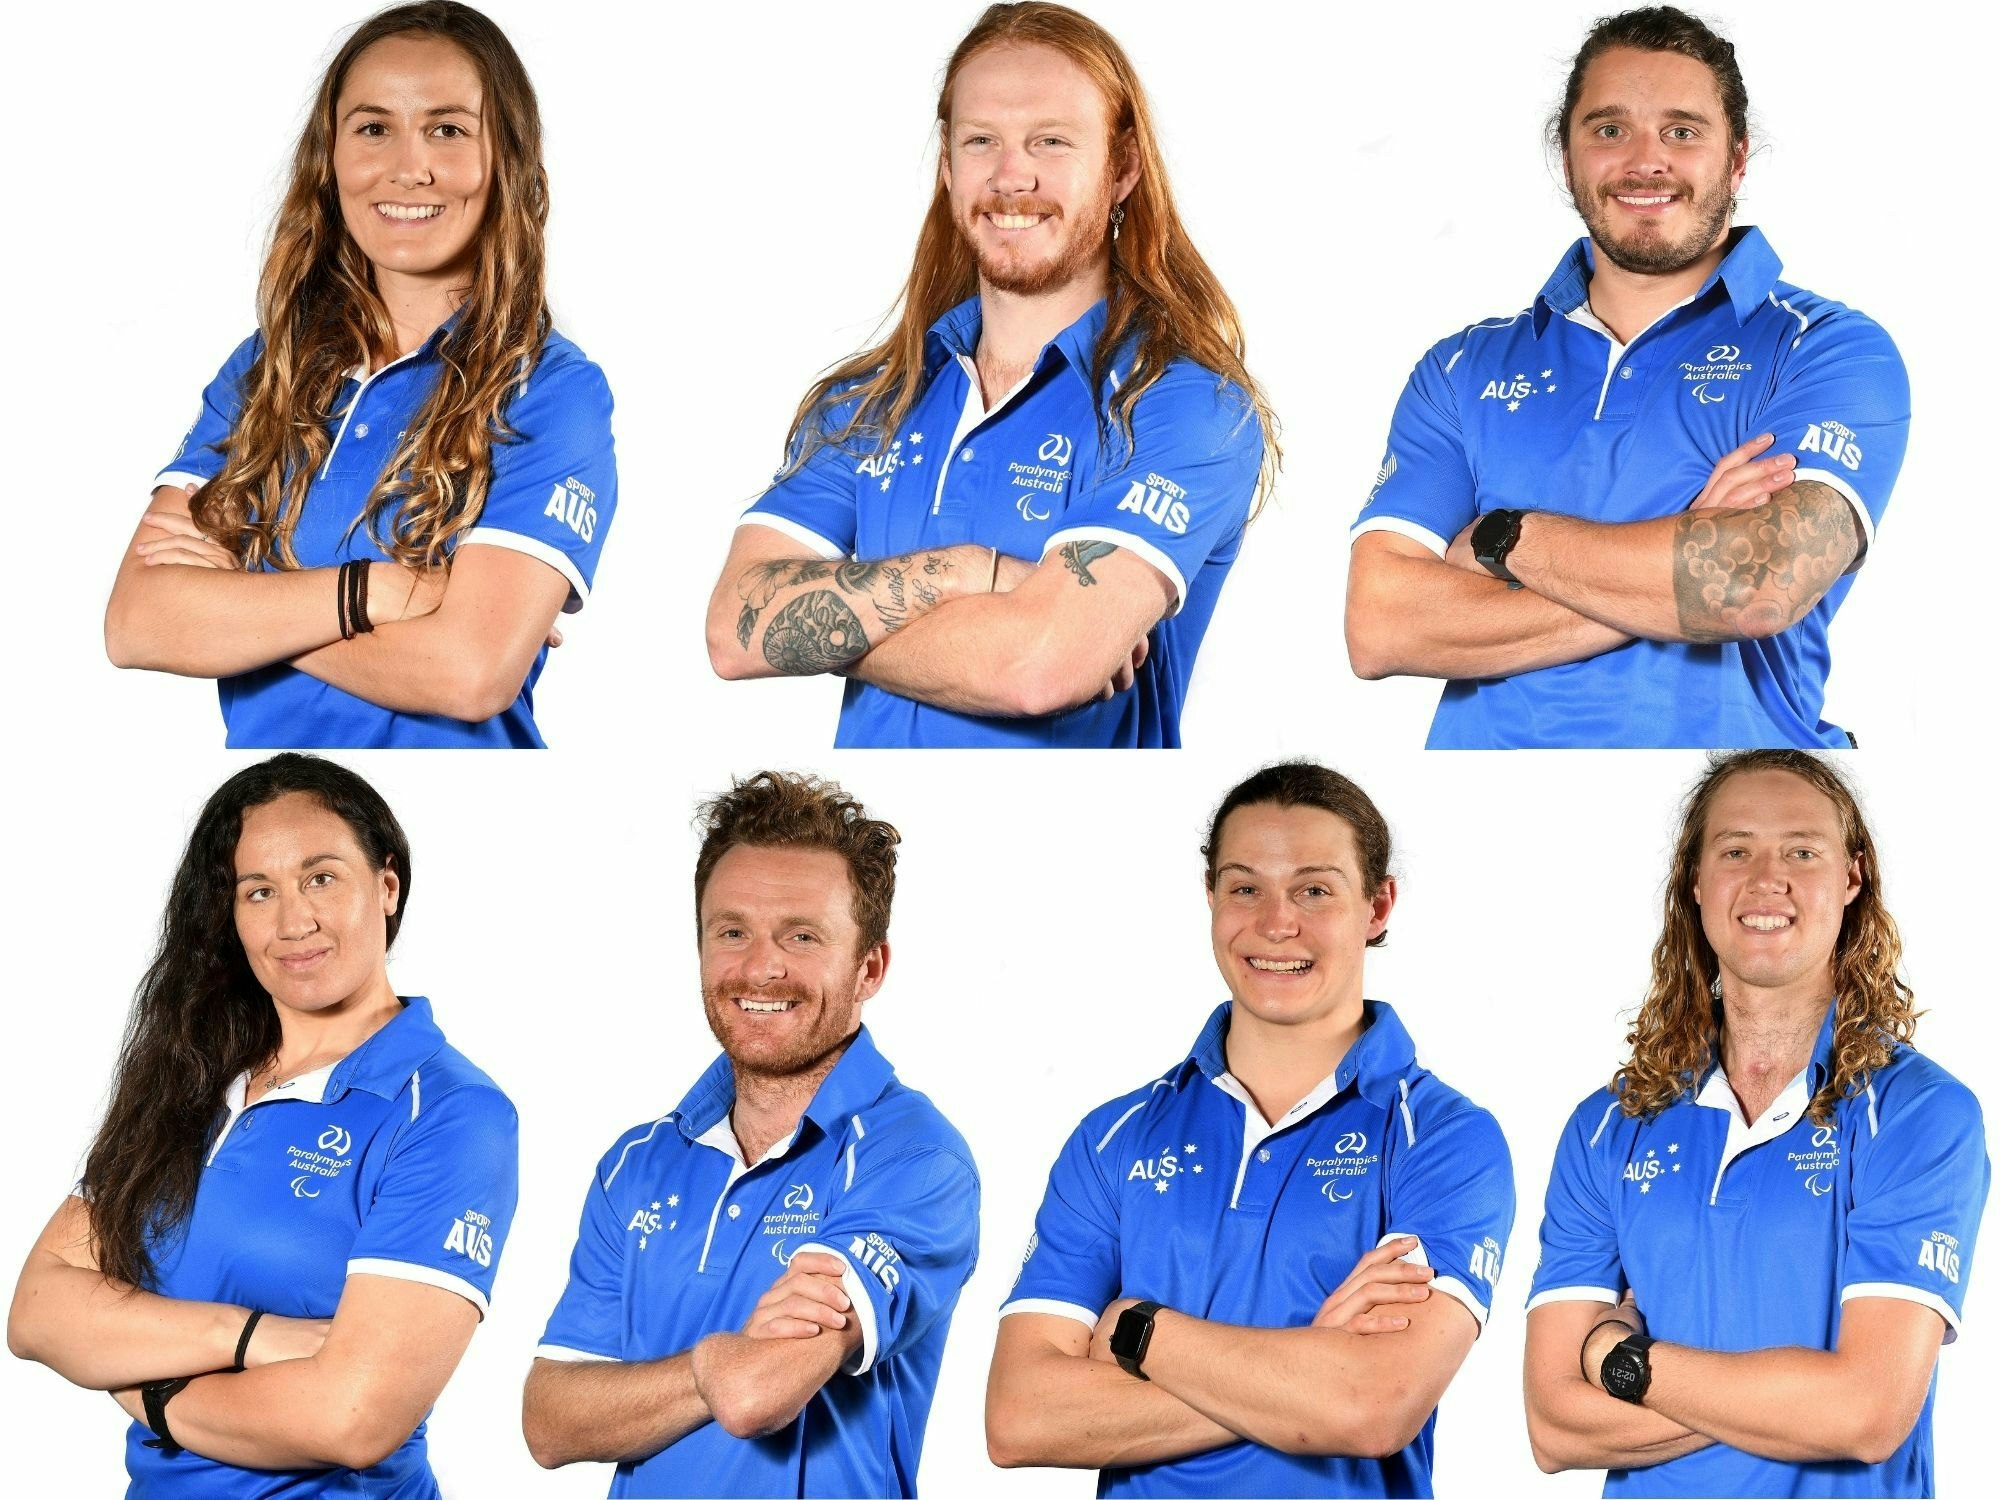 Australia&#8217;s Winter Paralympic team, from top left; Rae Anderson, Patrick Jensen, Sam Tait, bottom row from left; Melissa Perrine, Mitchell Gourley, Ben Tudhope, Josh Hanlon. [Source: Supplied]
